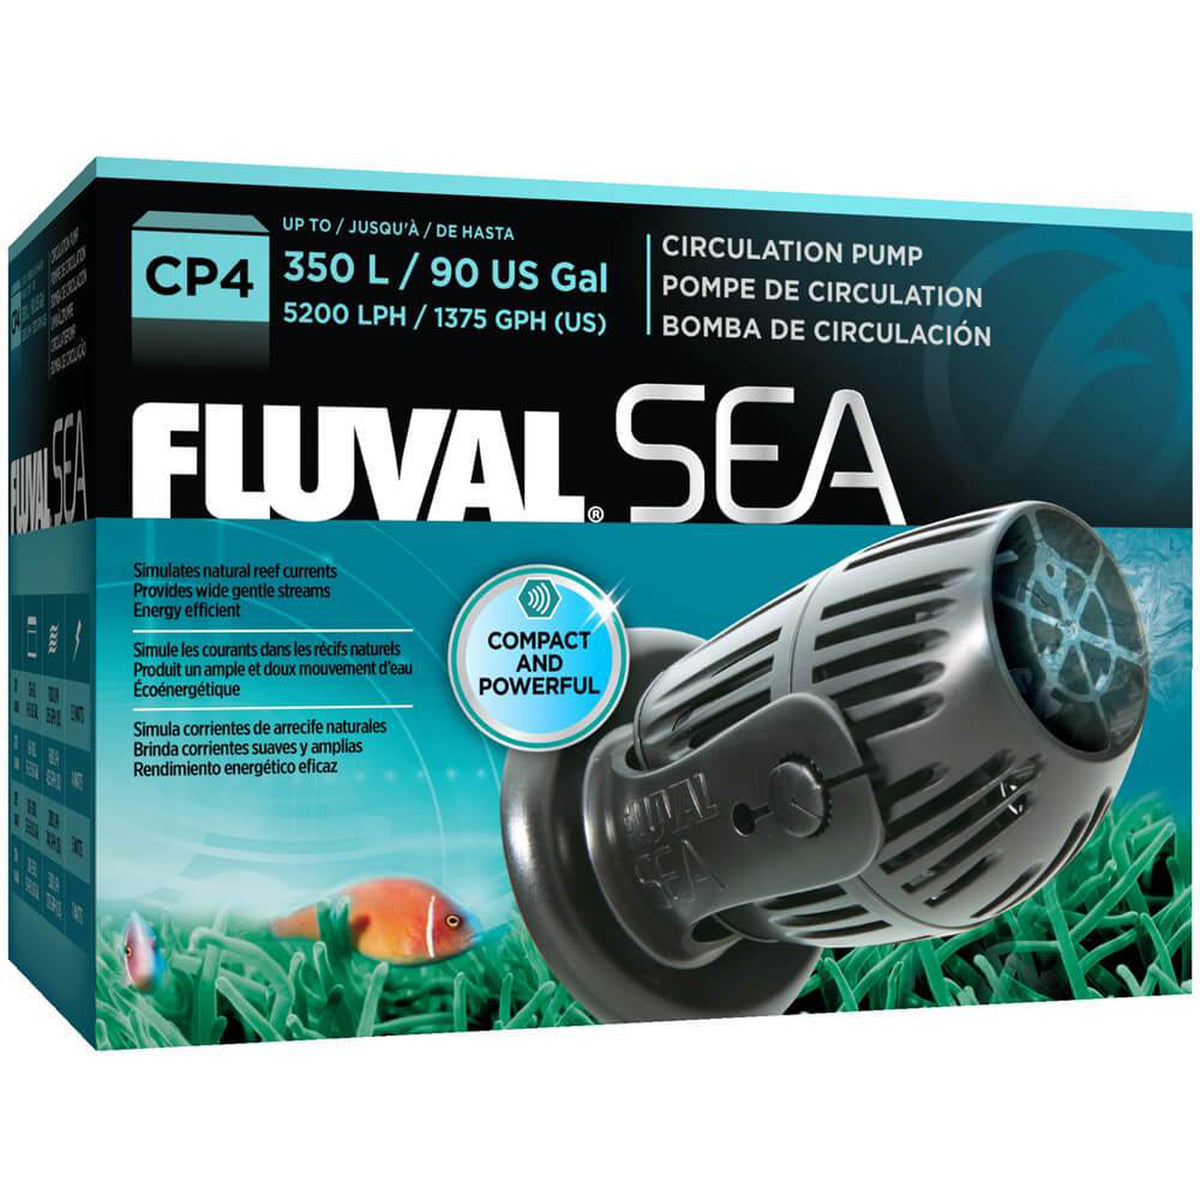 Fluval Sea Circulation Pump Range